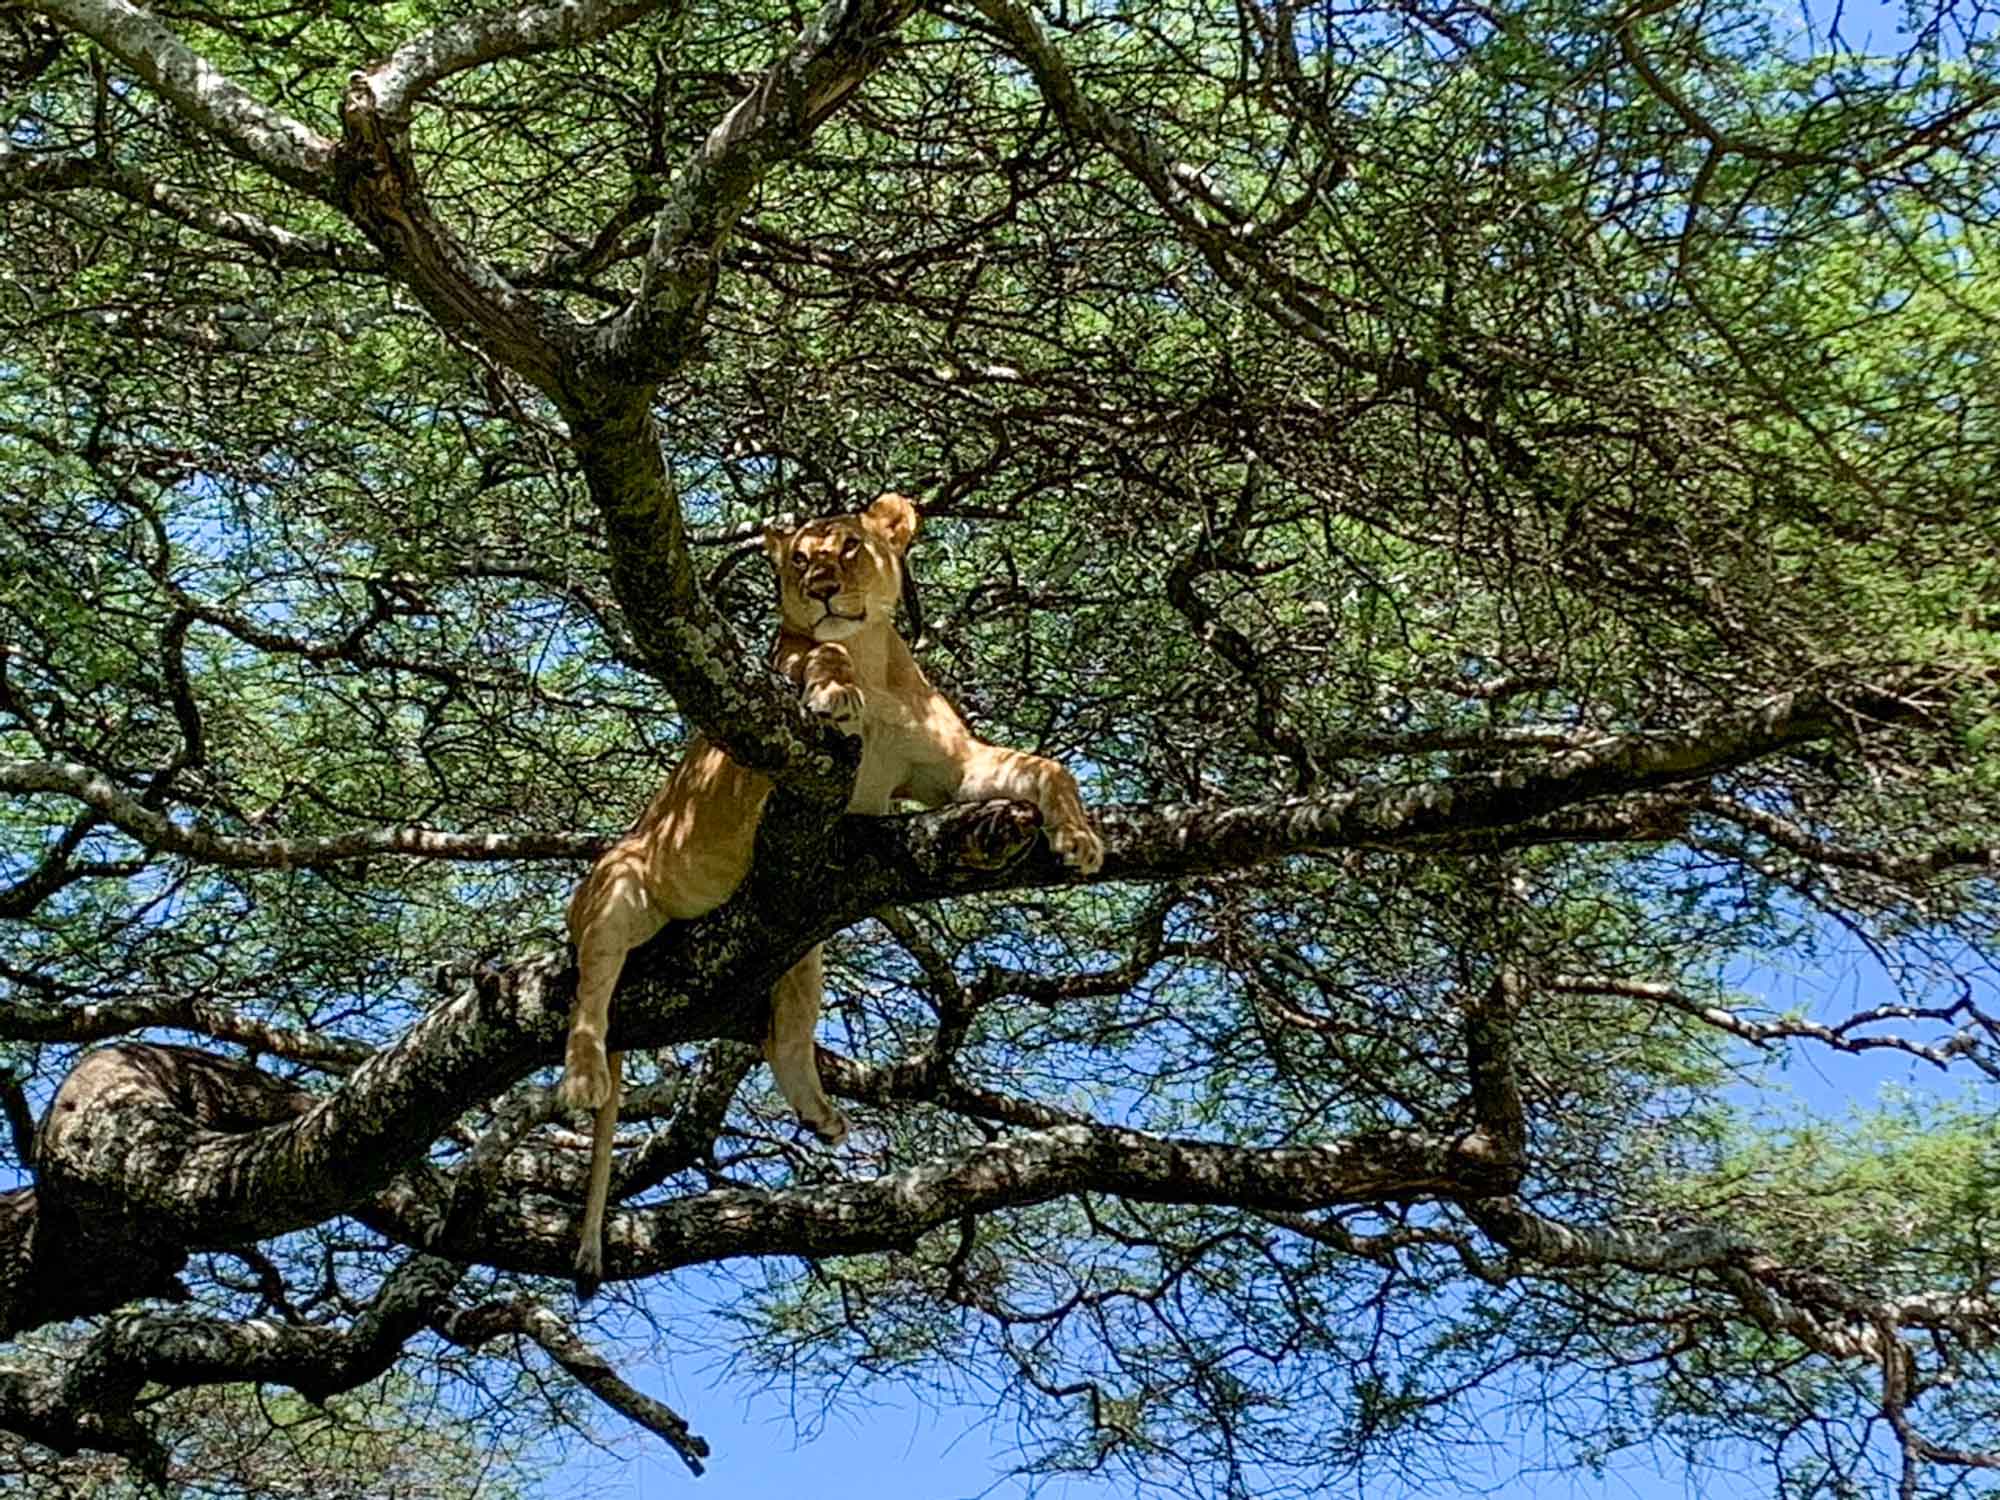 Foresight Ecolodge & Safari – Lion on tree